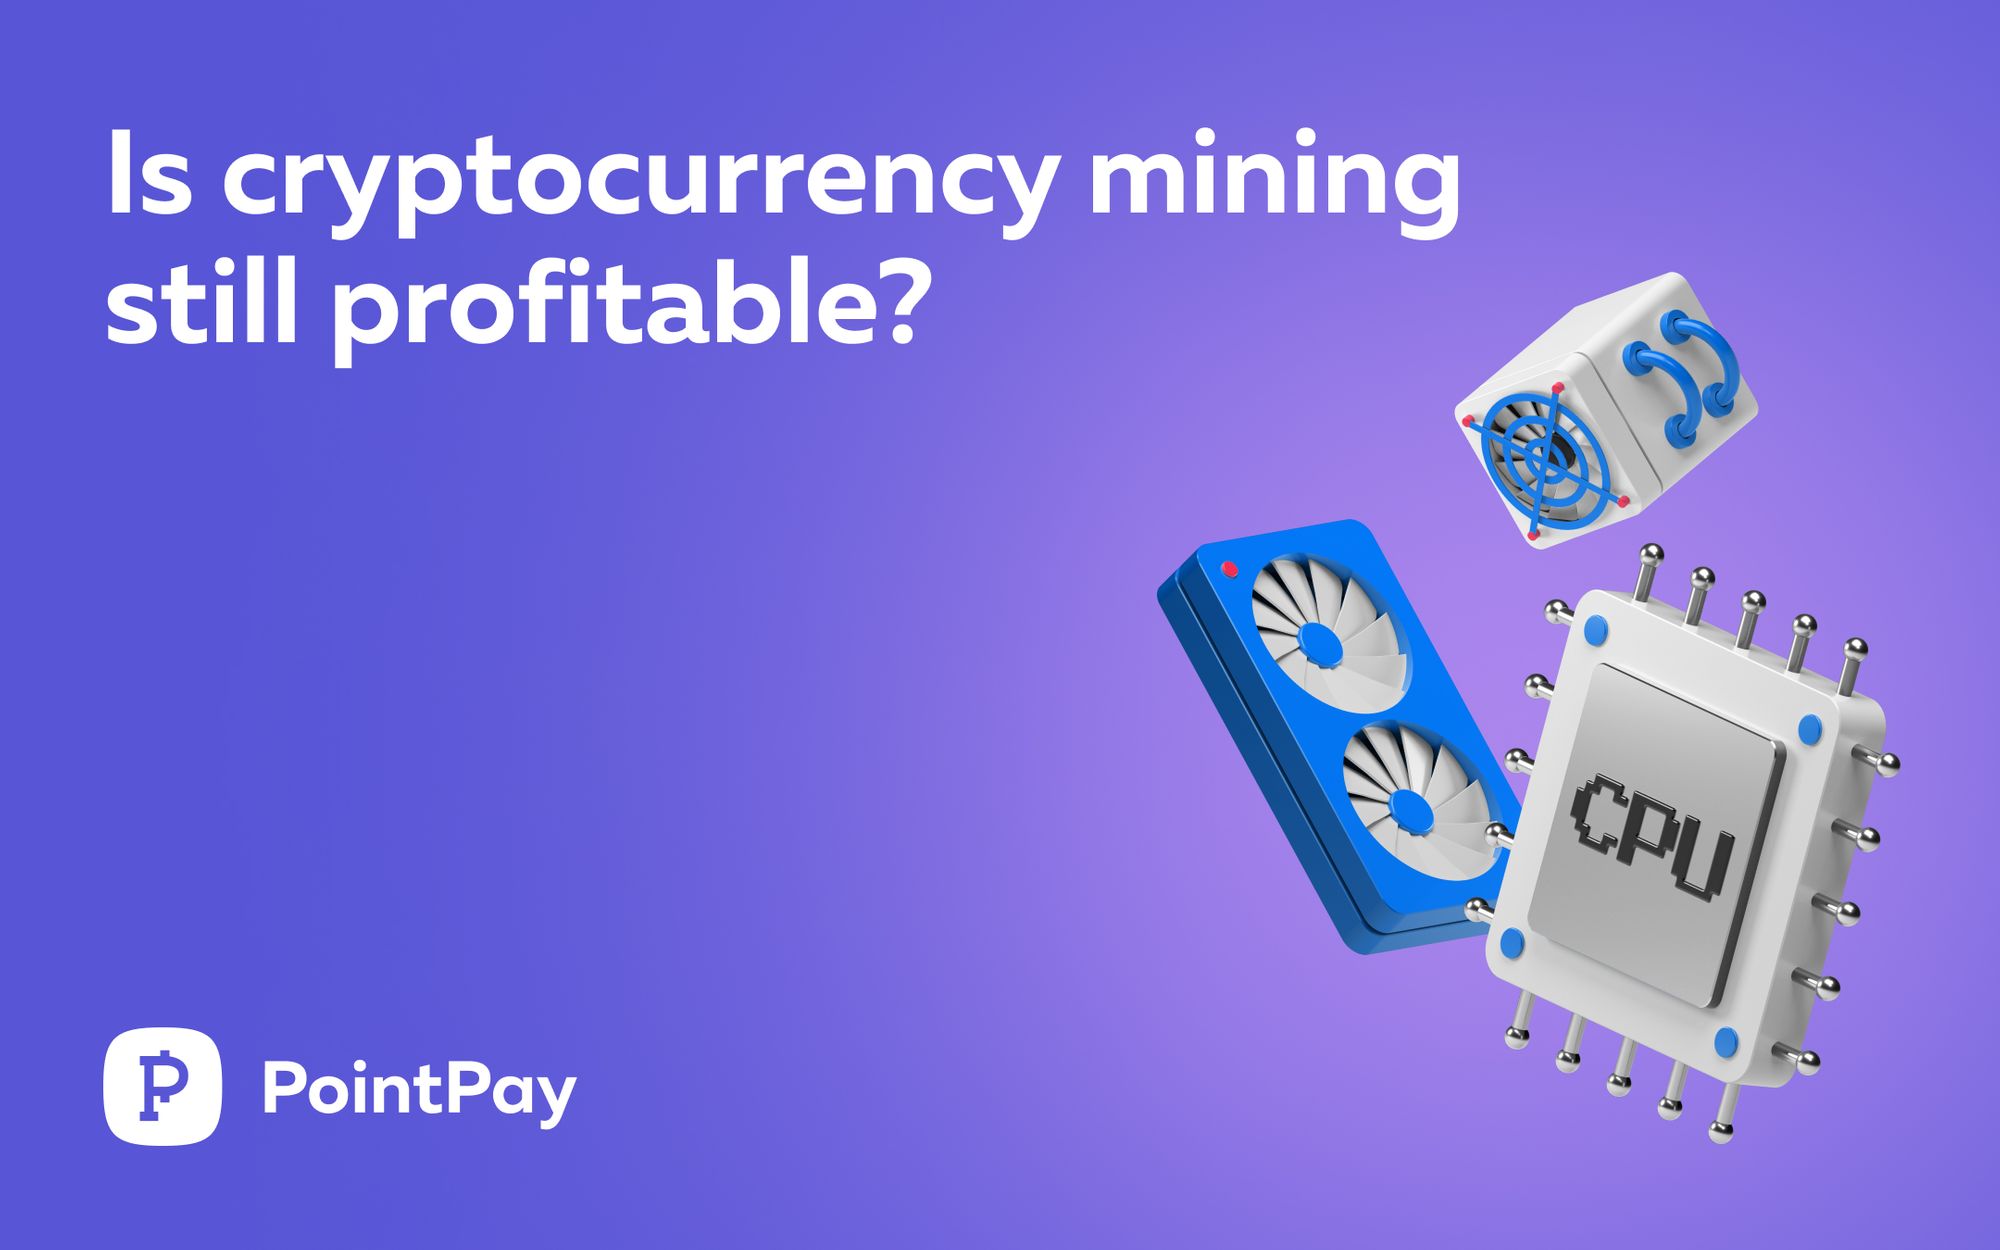 crypto mining is not profitable